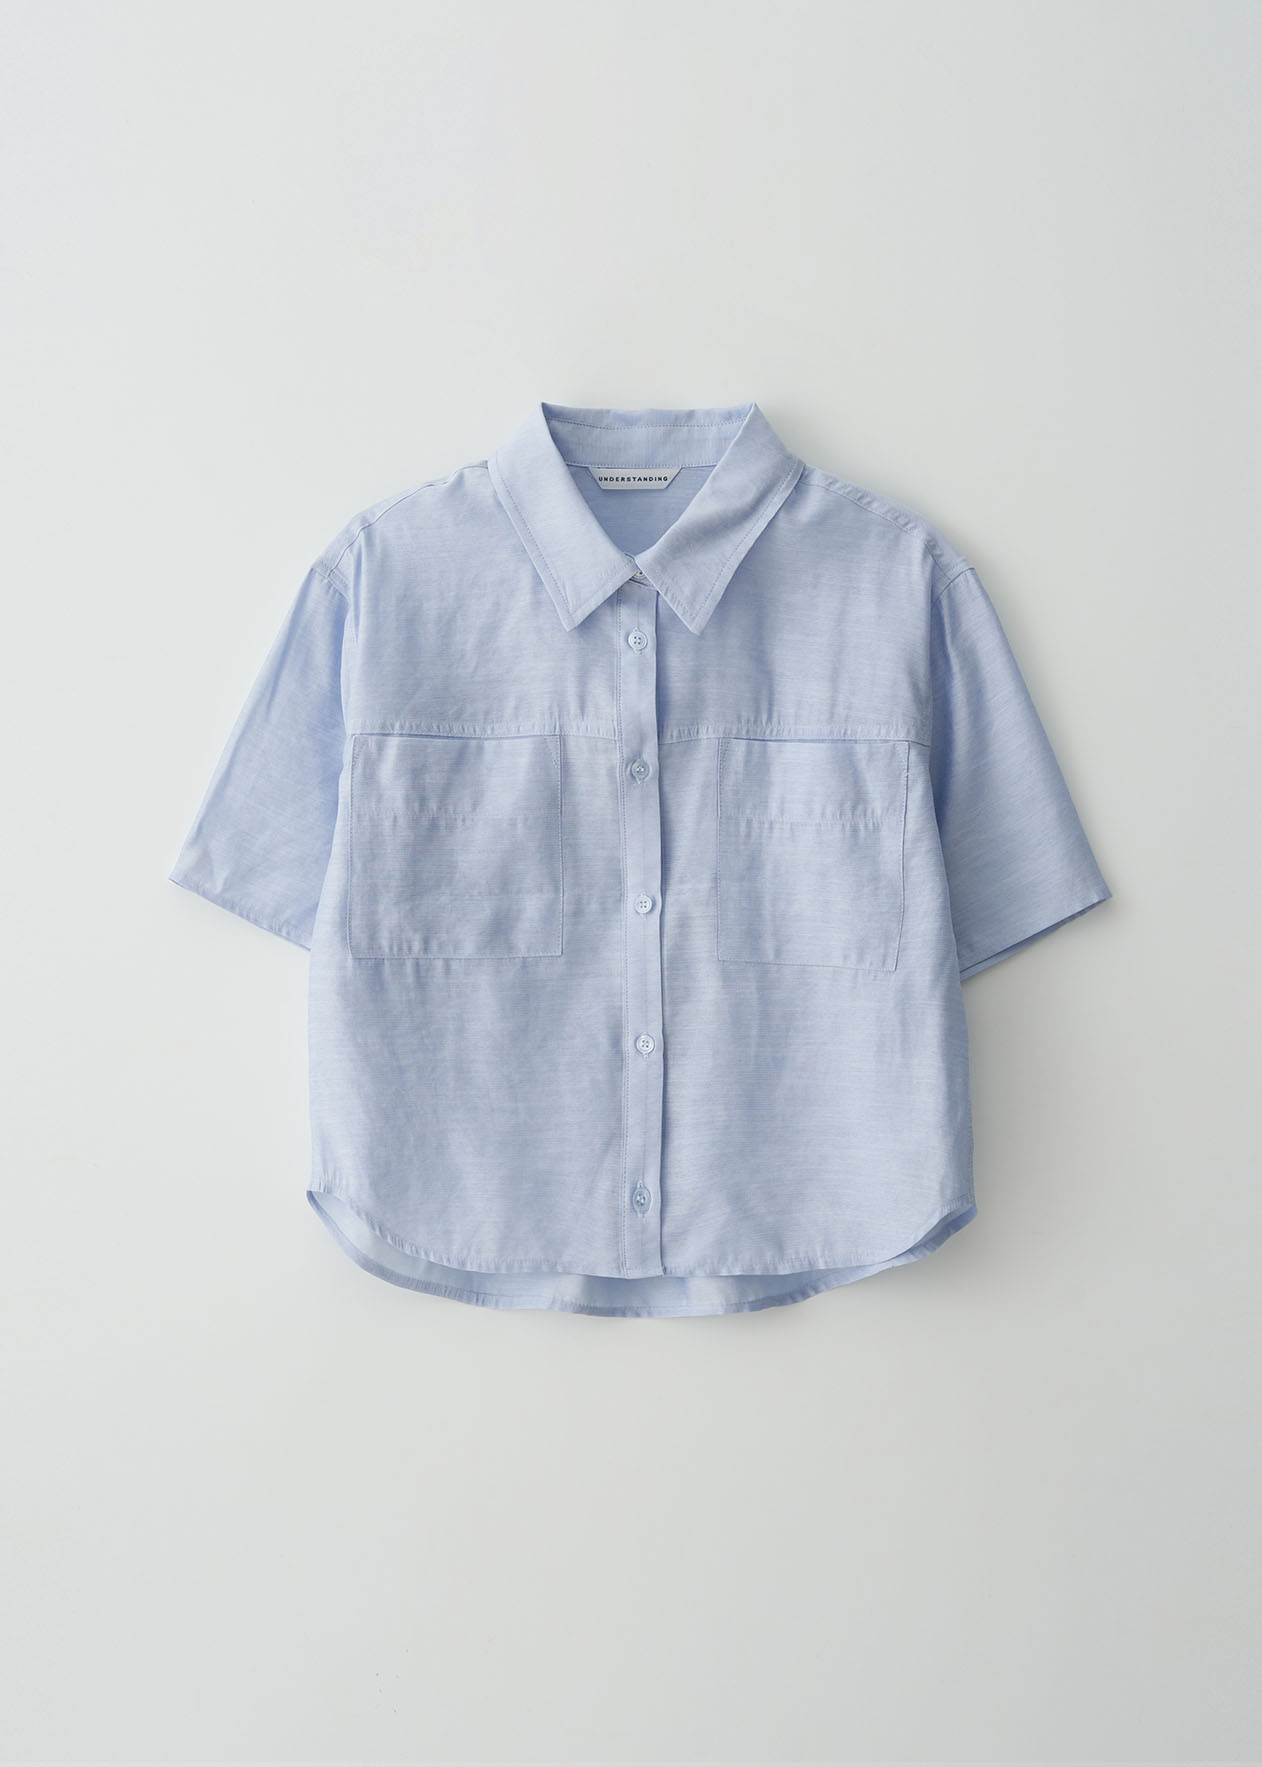 Two-pocket half shirt